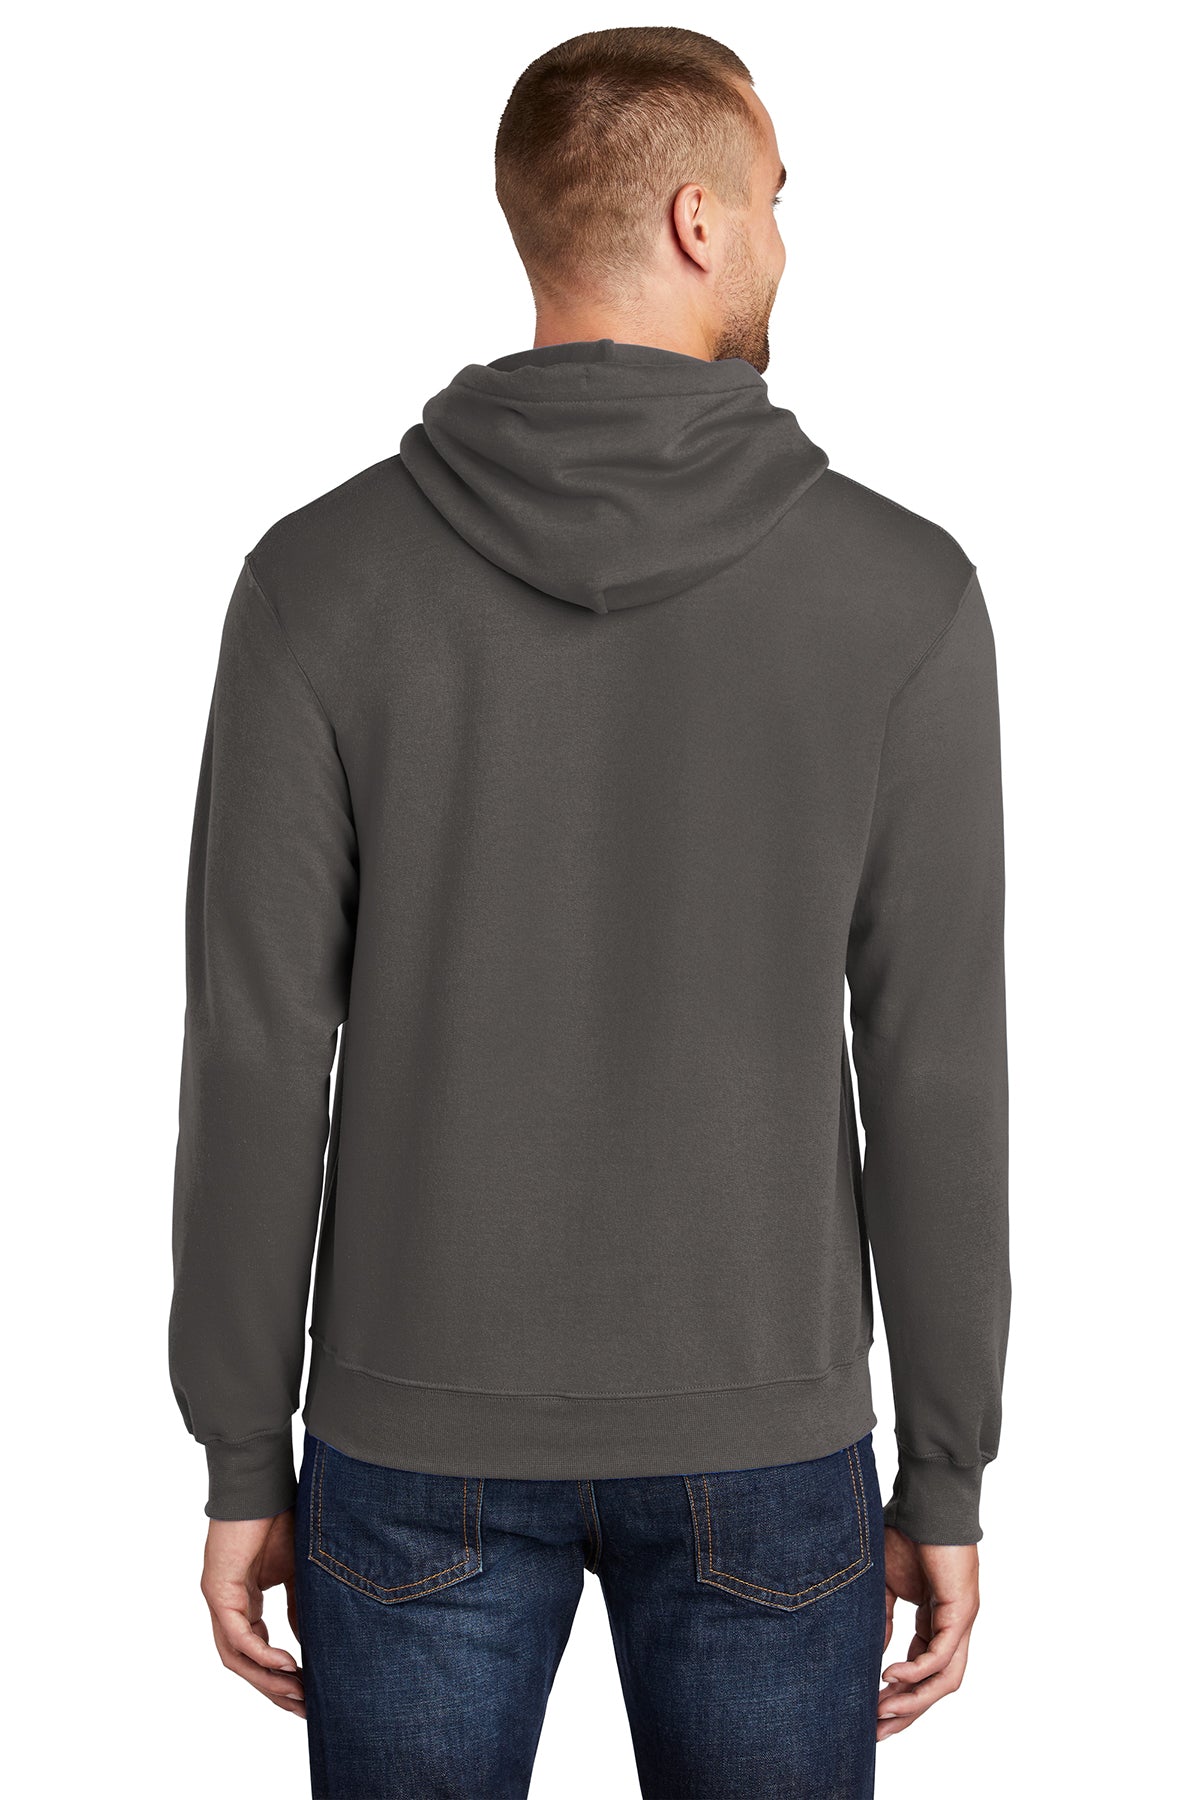 Port & Company PC78H Mens Core Fleece Hooded Sweatshirt Hoodie Charcoal Grey Back